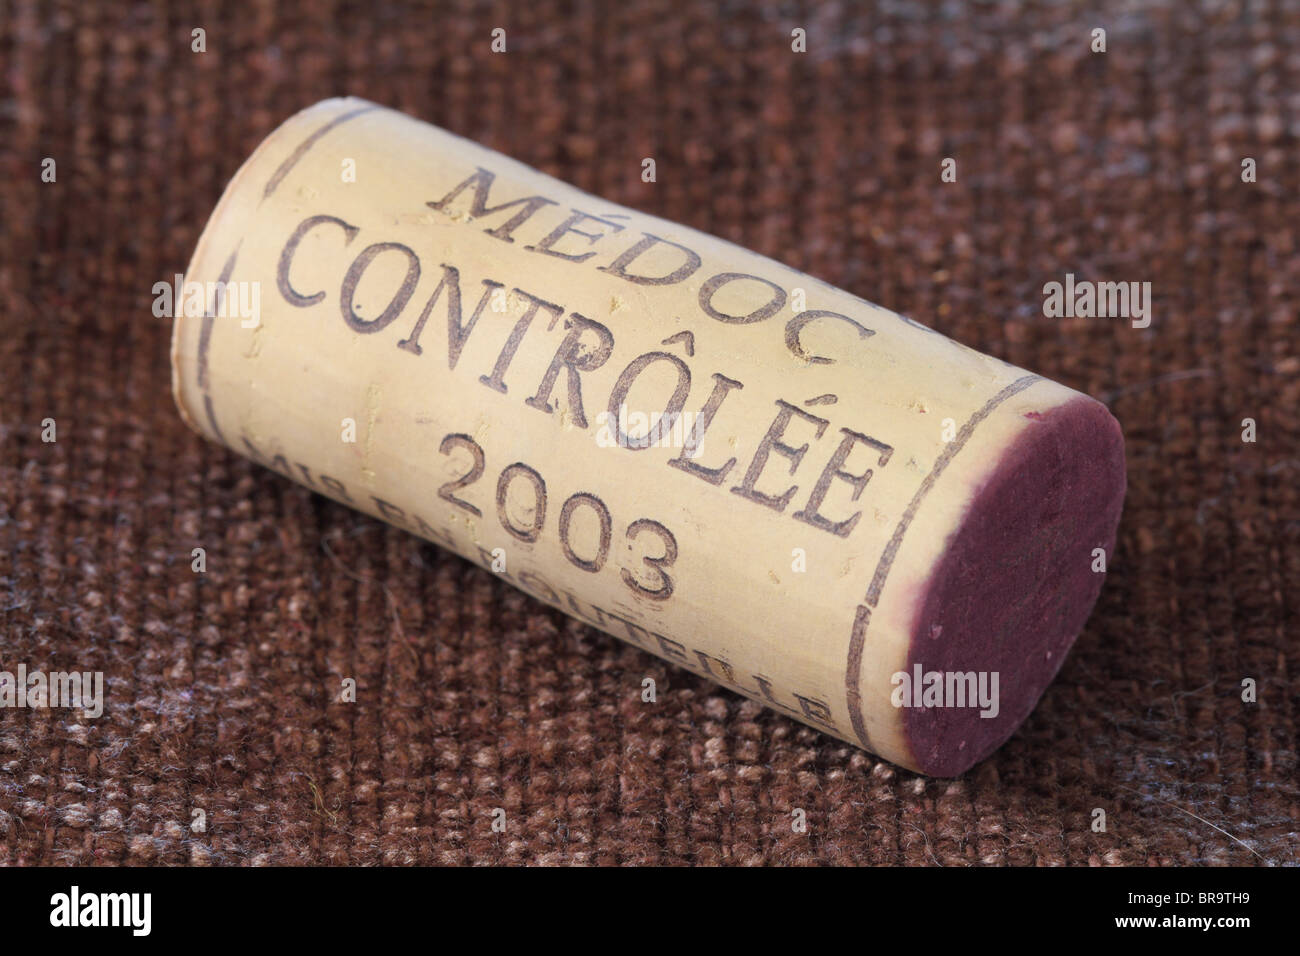 Medoc 2003 french wine cork stopper Stock Photo